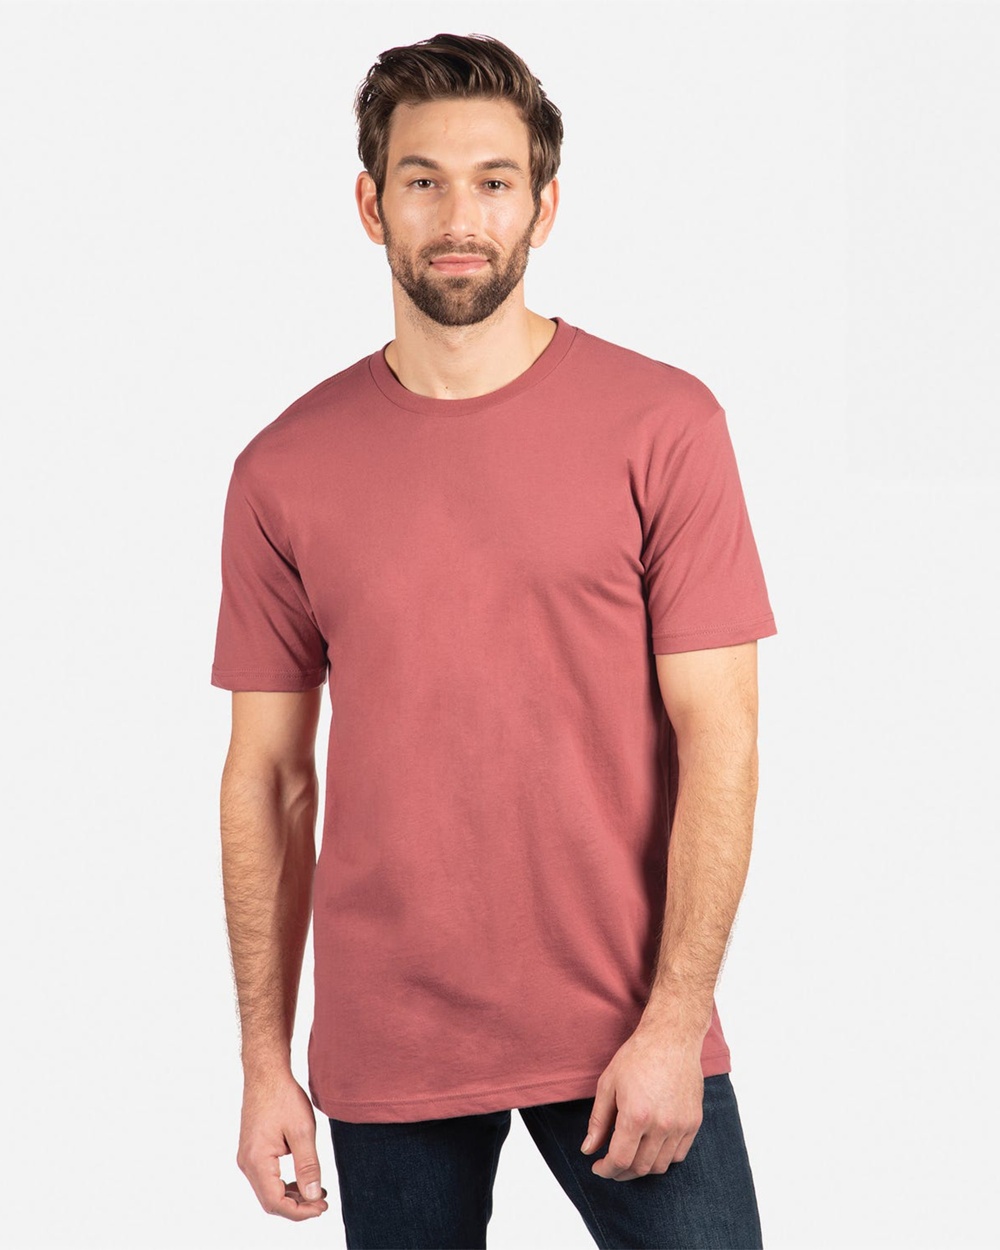 Next Level 3600 Light Pink Unisex Cotton T Shirt